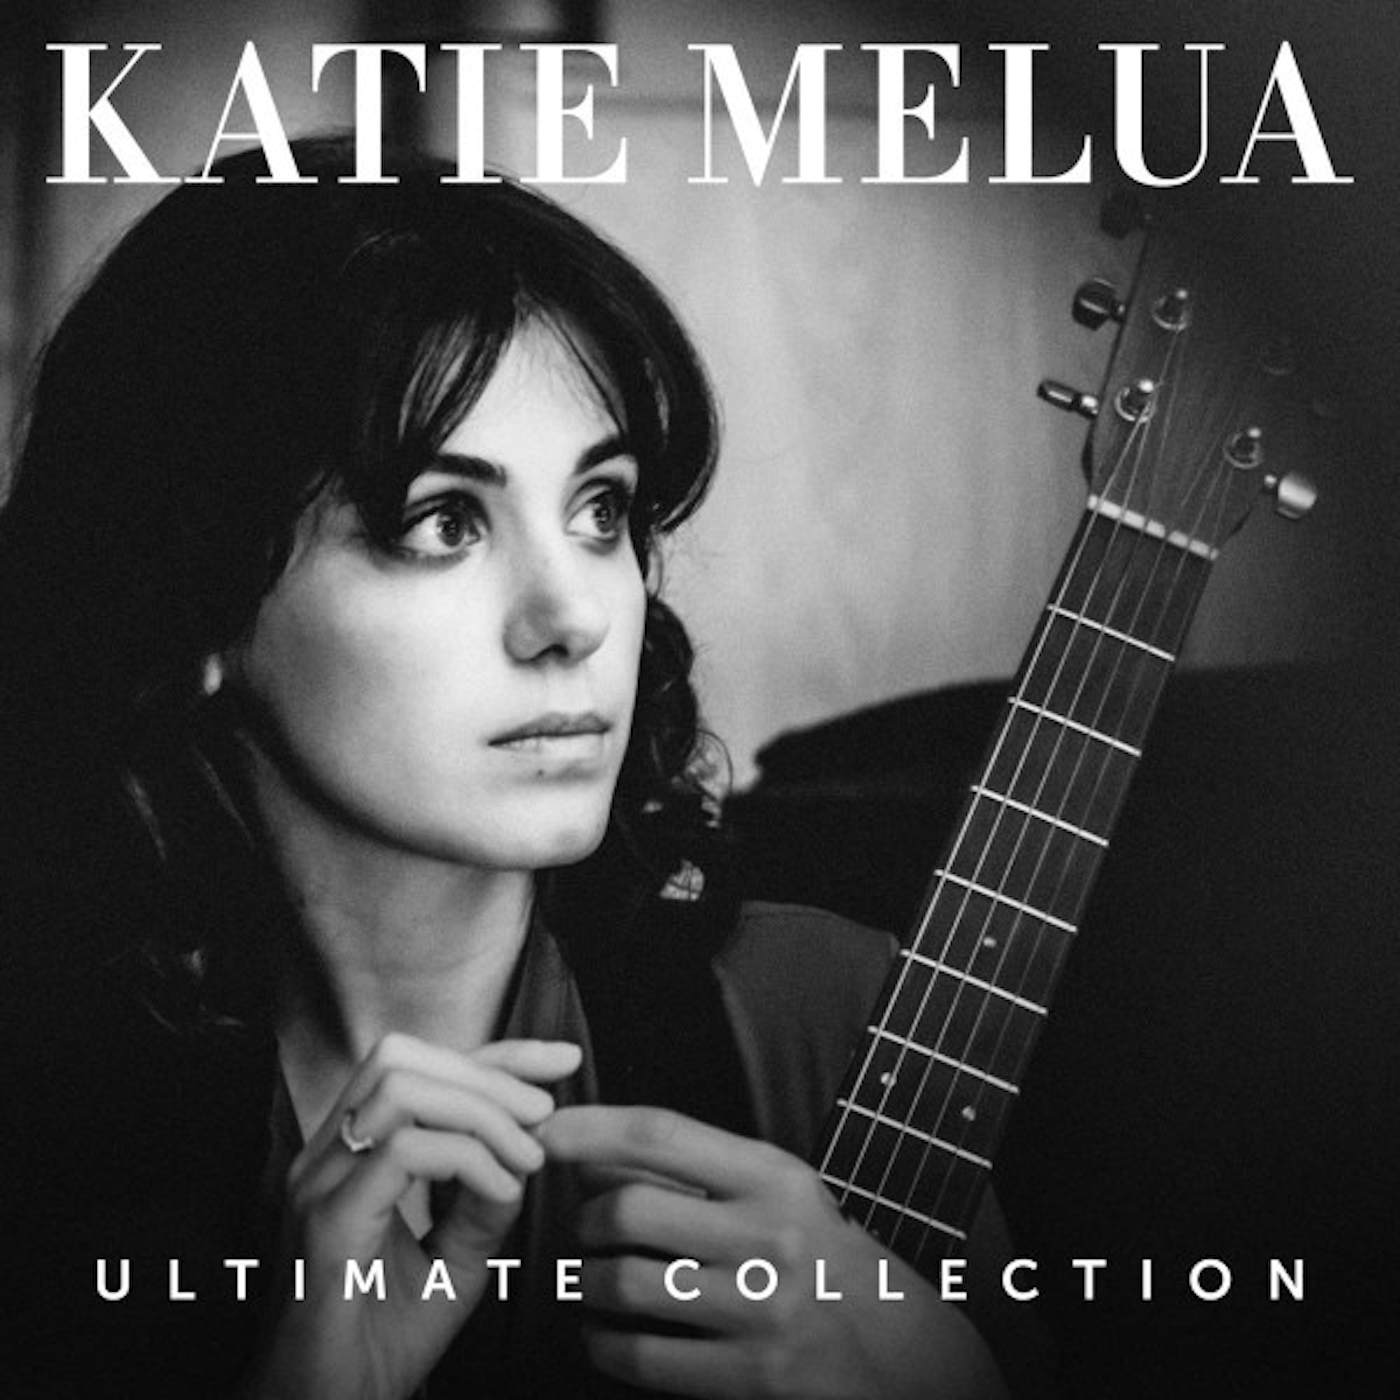 Katie Melua ULTIMATE COLLECTION Vinyl Record